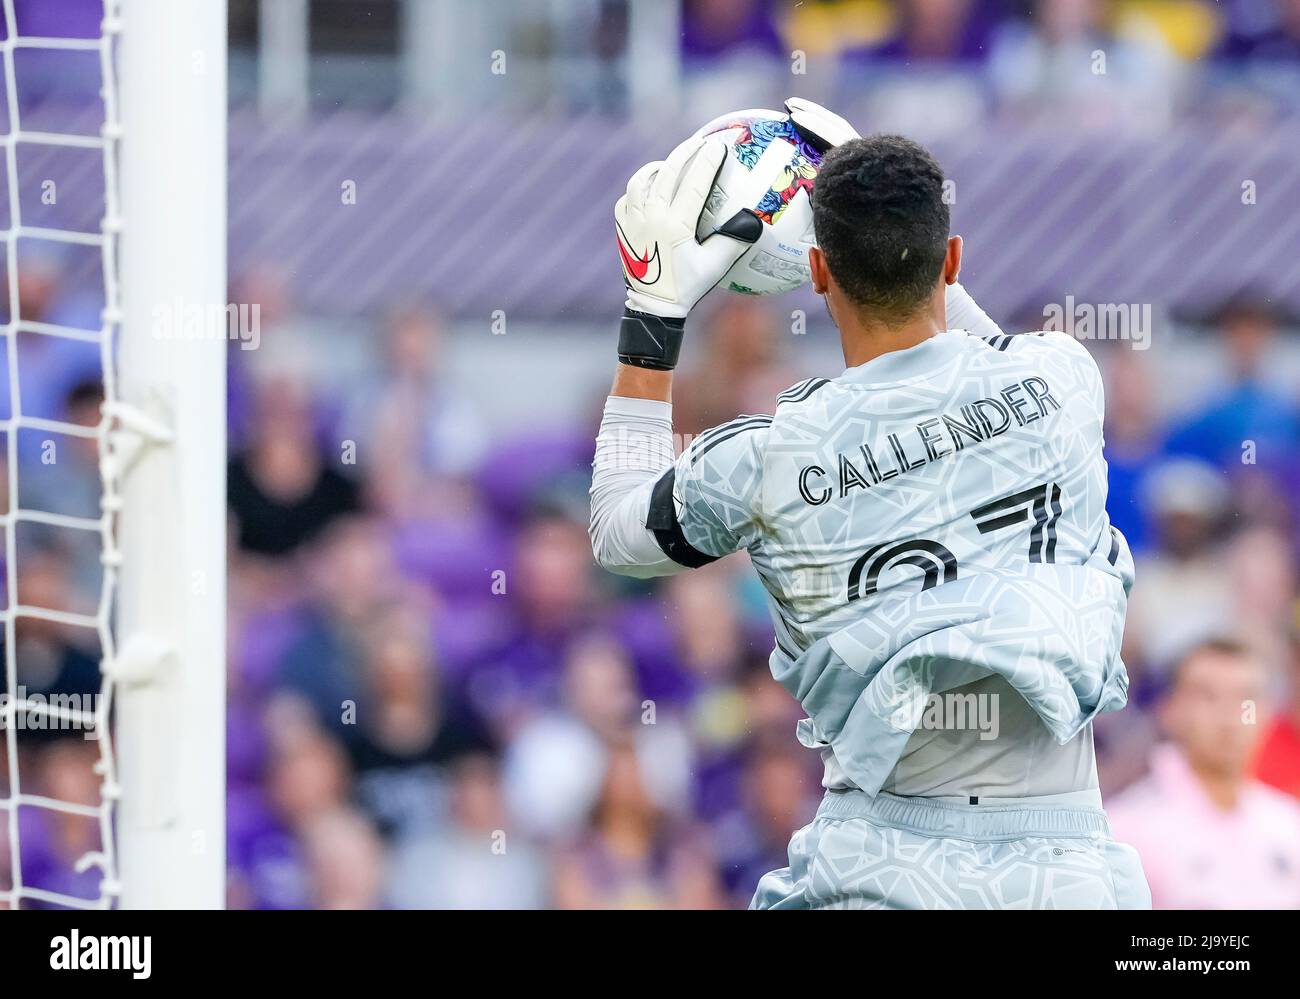 Inter Miami goalkeeper Drake Callender's perfect Fort Lauderdale